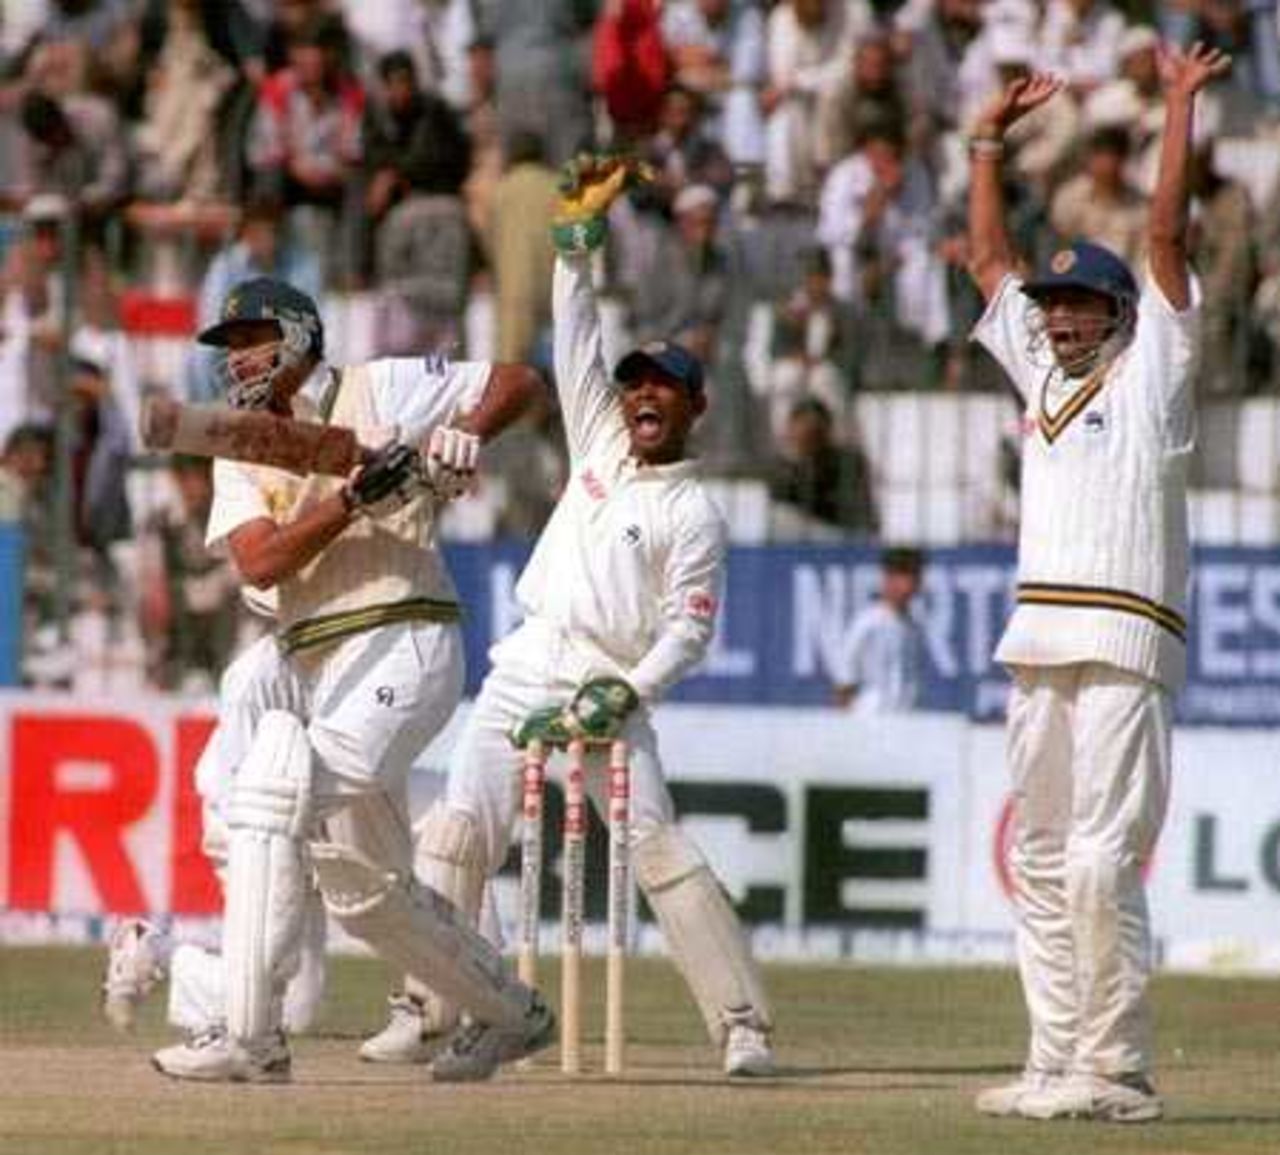 Kaluwitharan appealing against Arshad Khan, Pakistan v Sri Lanka, 2nd Test 5-9 March 2000